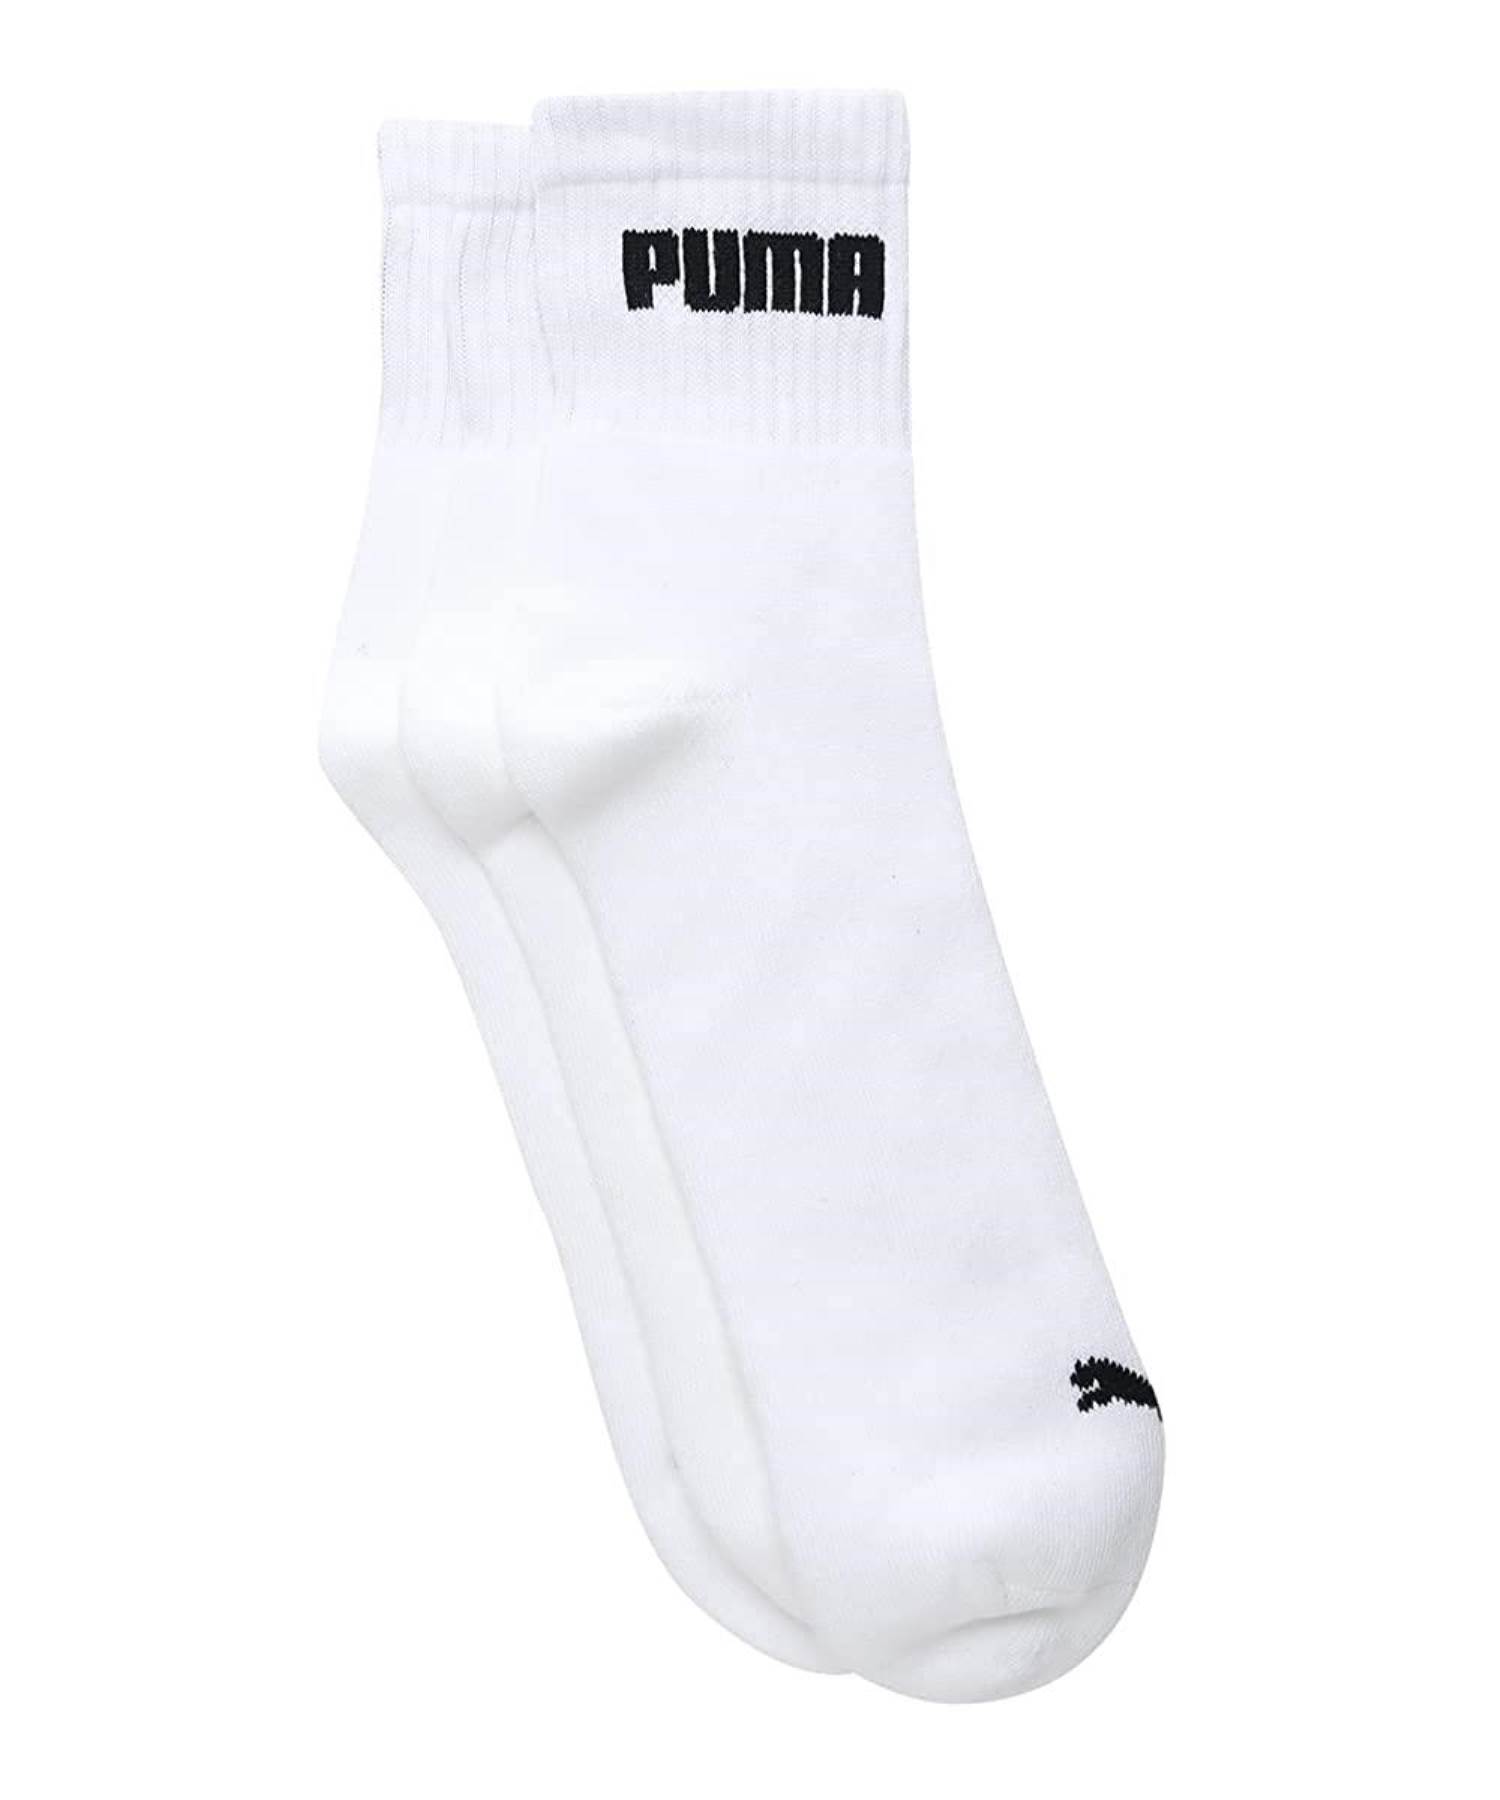 Puma Brand Mens Sports Quarter Socks Pack of 3 92965702 (White ...